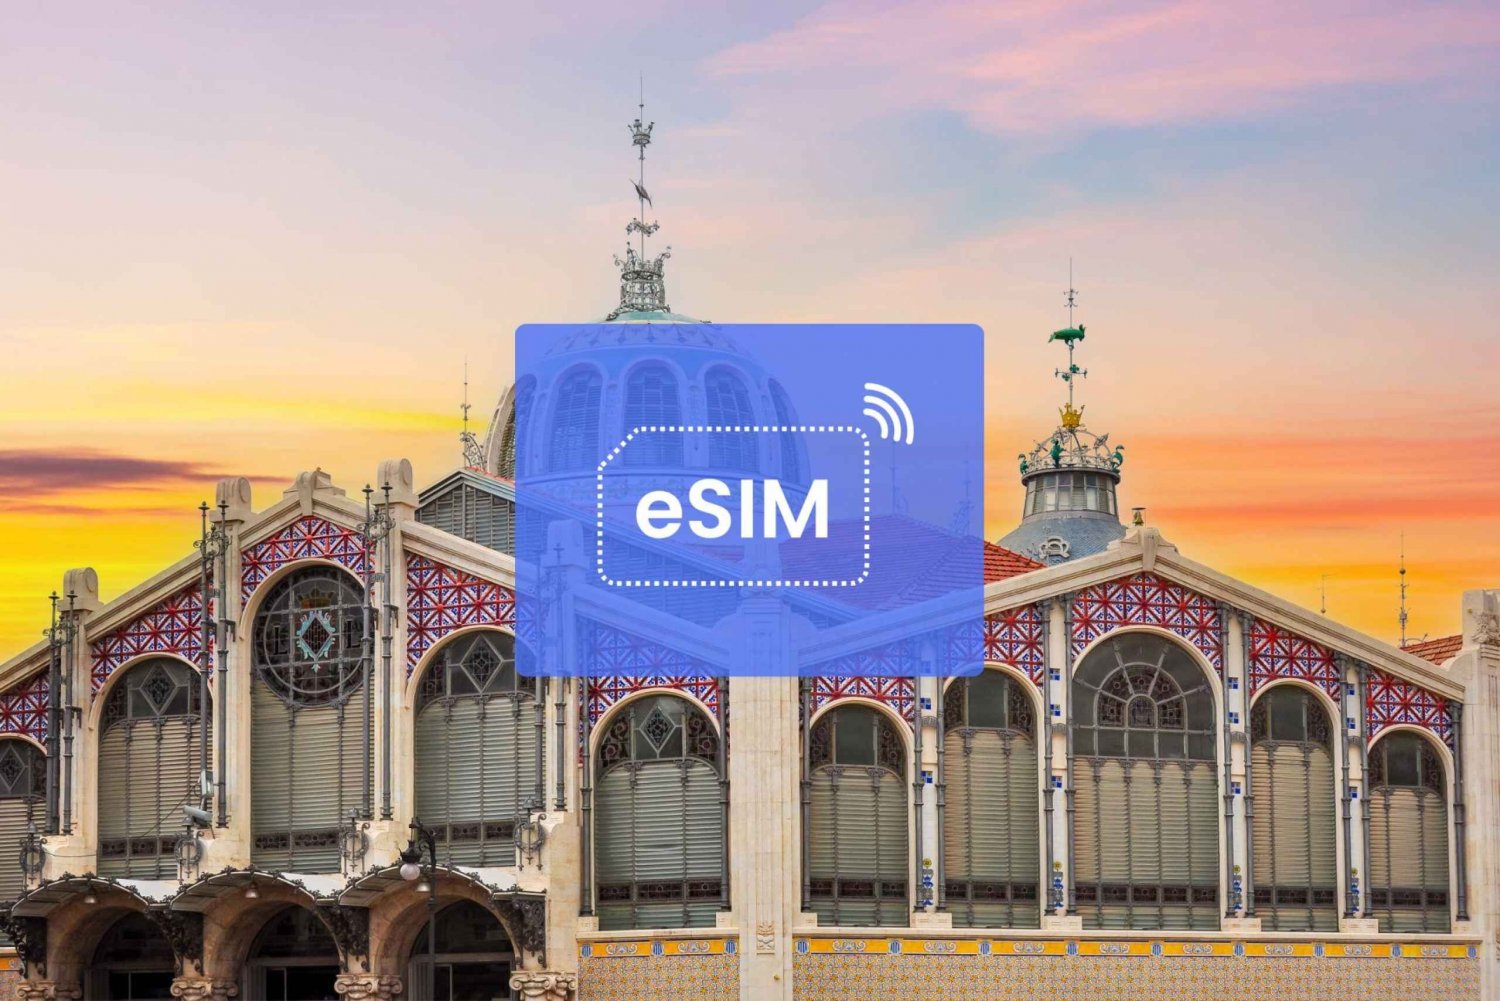 Valencia: Spain/ Europe eSIM Roaming Mobile Data Plan